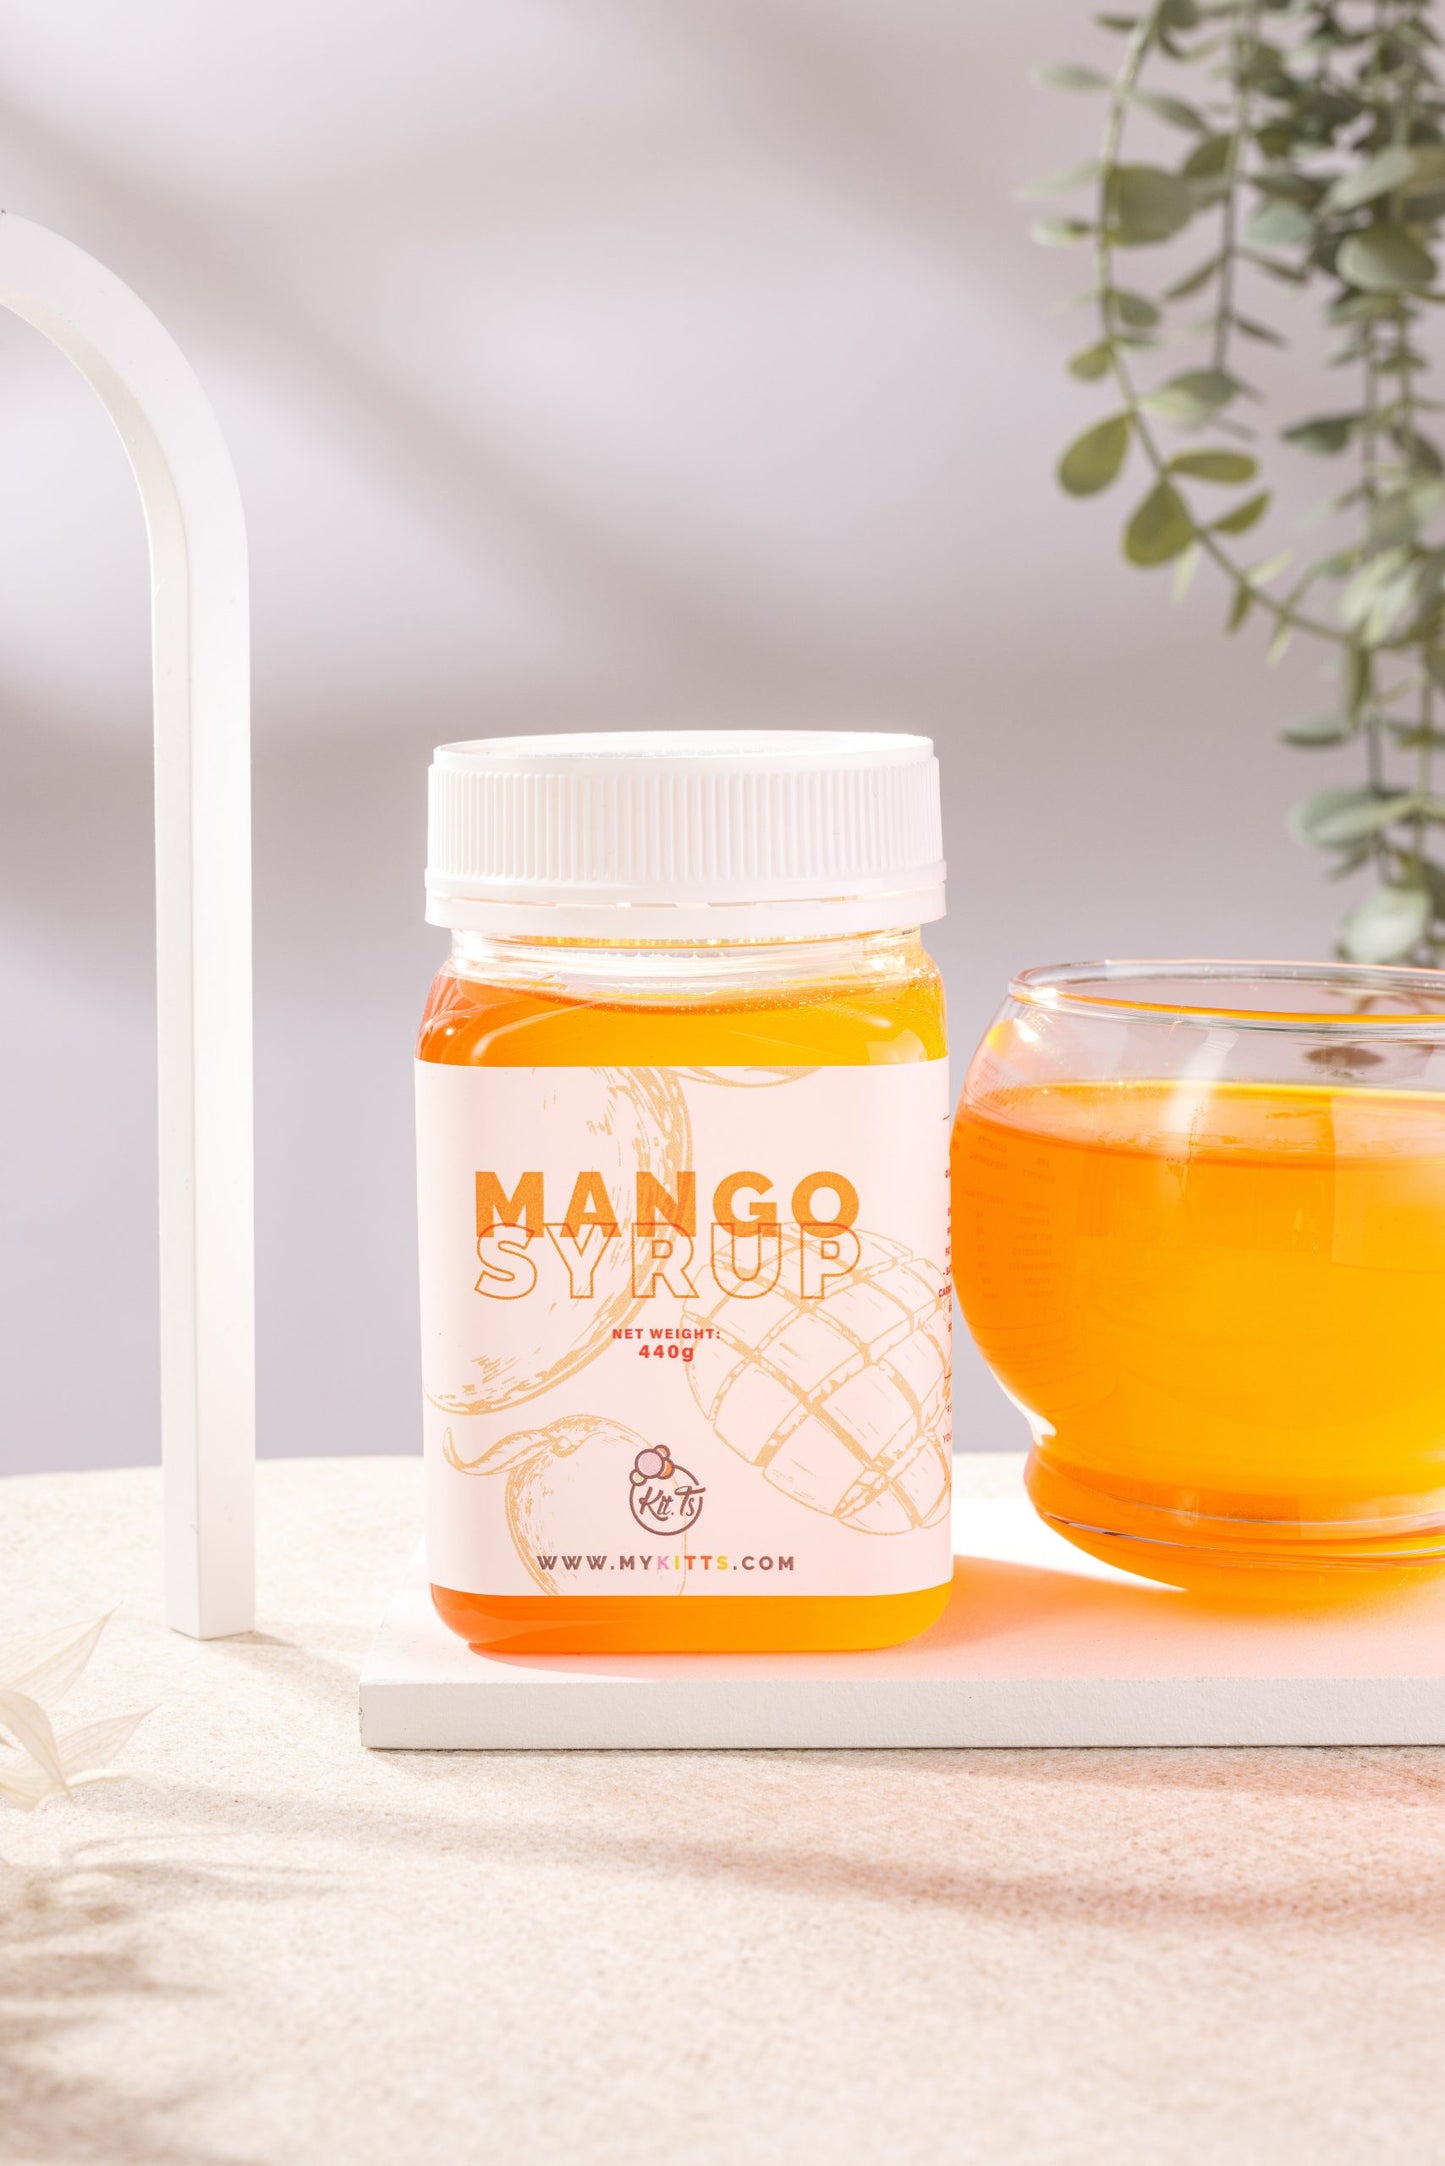 Mango Syrup - 440g